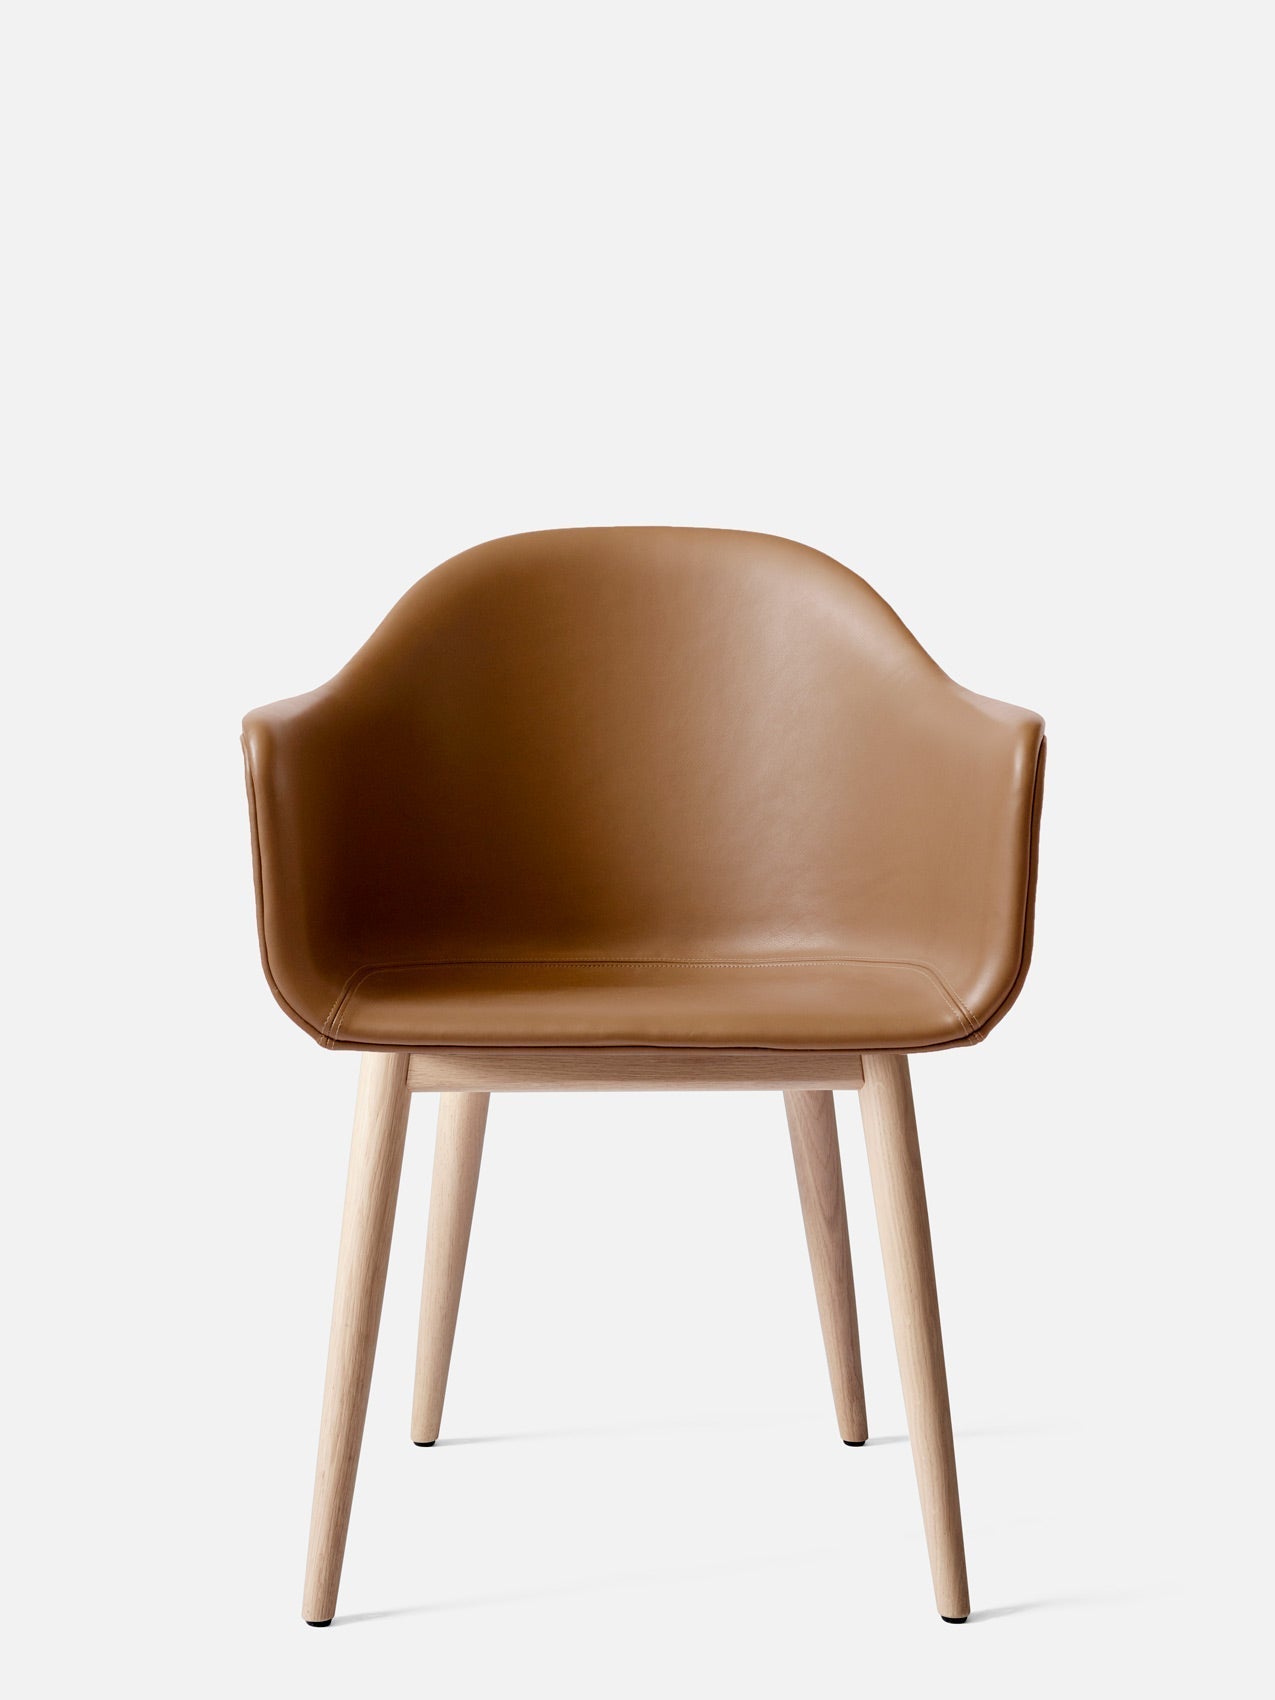 Harbour Arm Chair, Upholstered-Chair-Norm Architects-Natural Oak-0250 Cognac/Dakar-menu-minimalist-modern-danish-design-home-decor